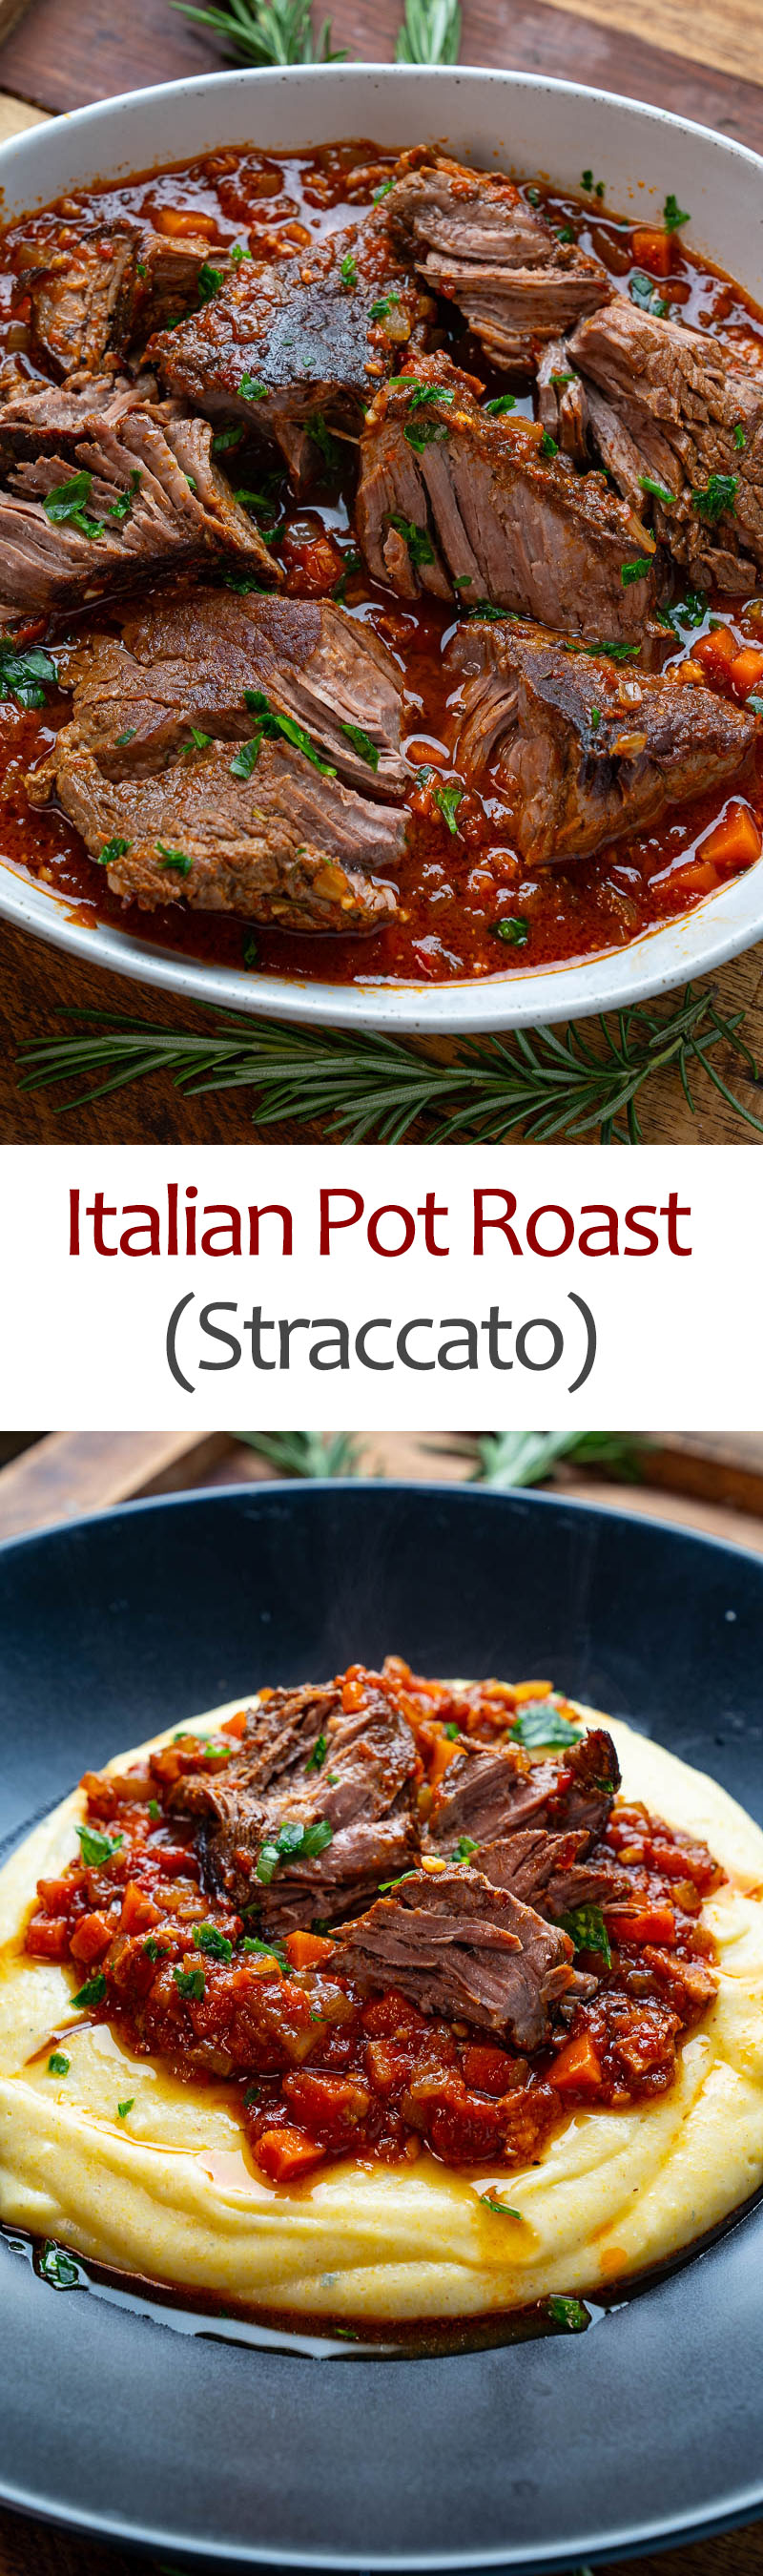 Italian Pot Roast (Stracotto)